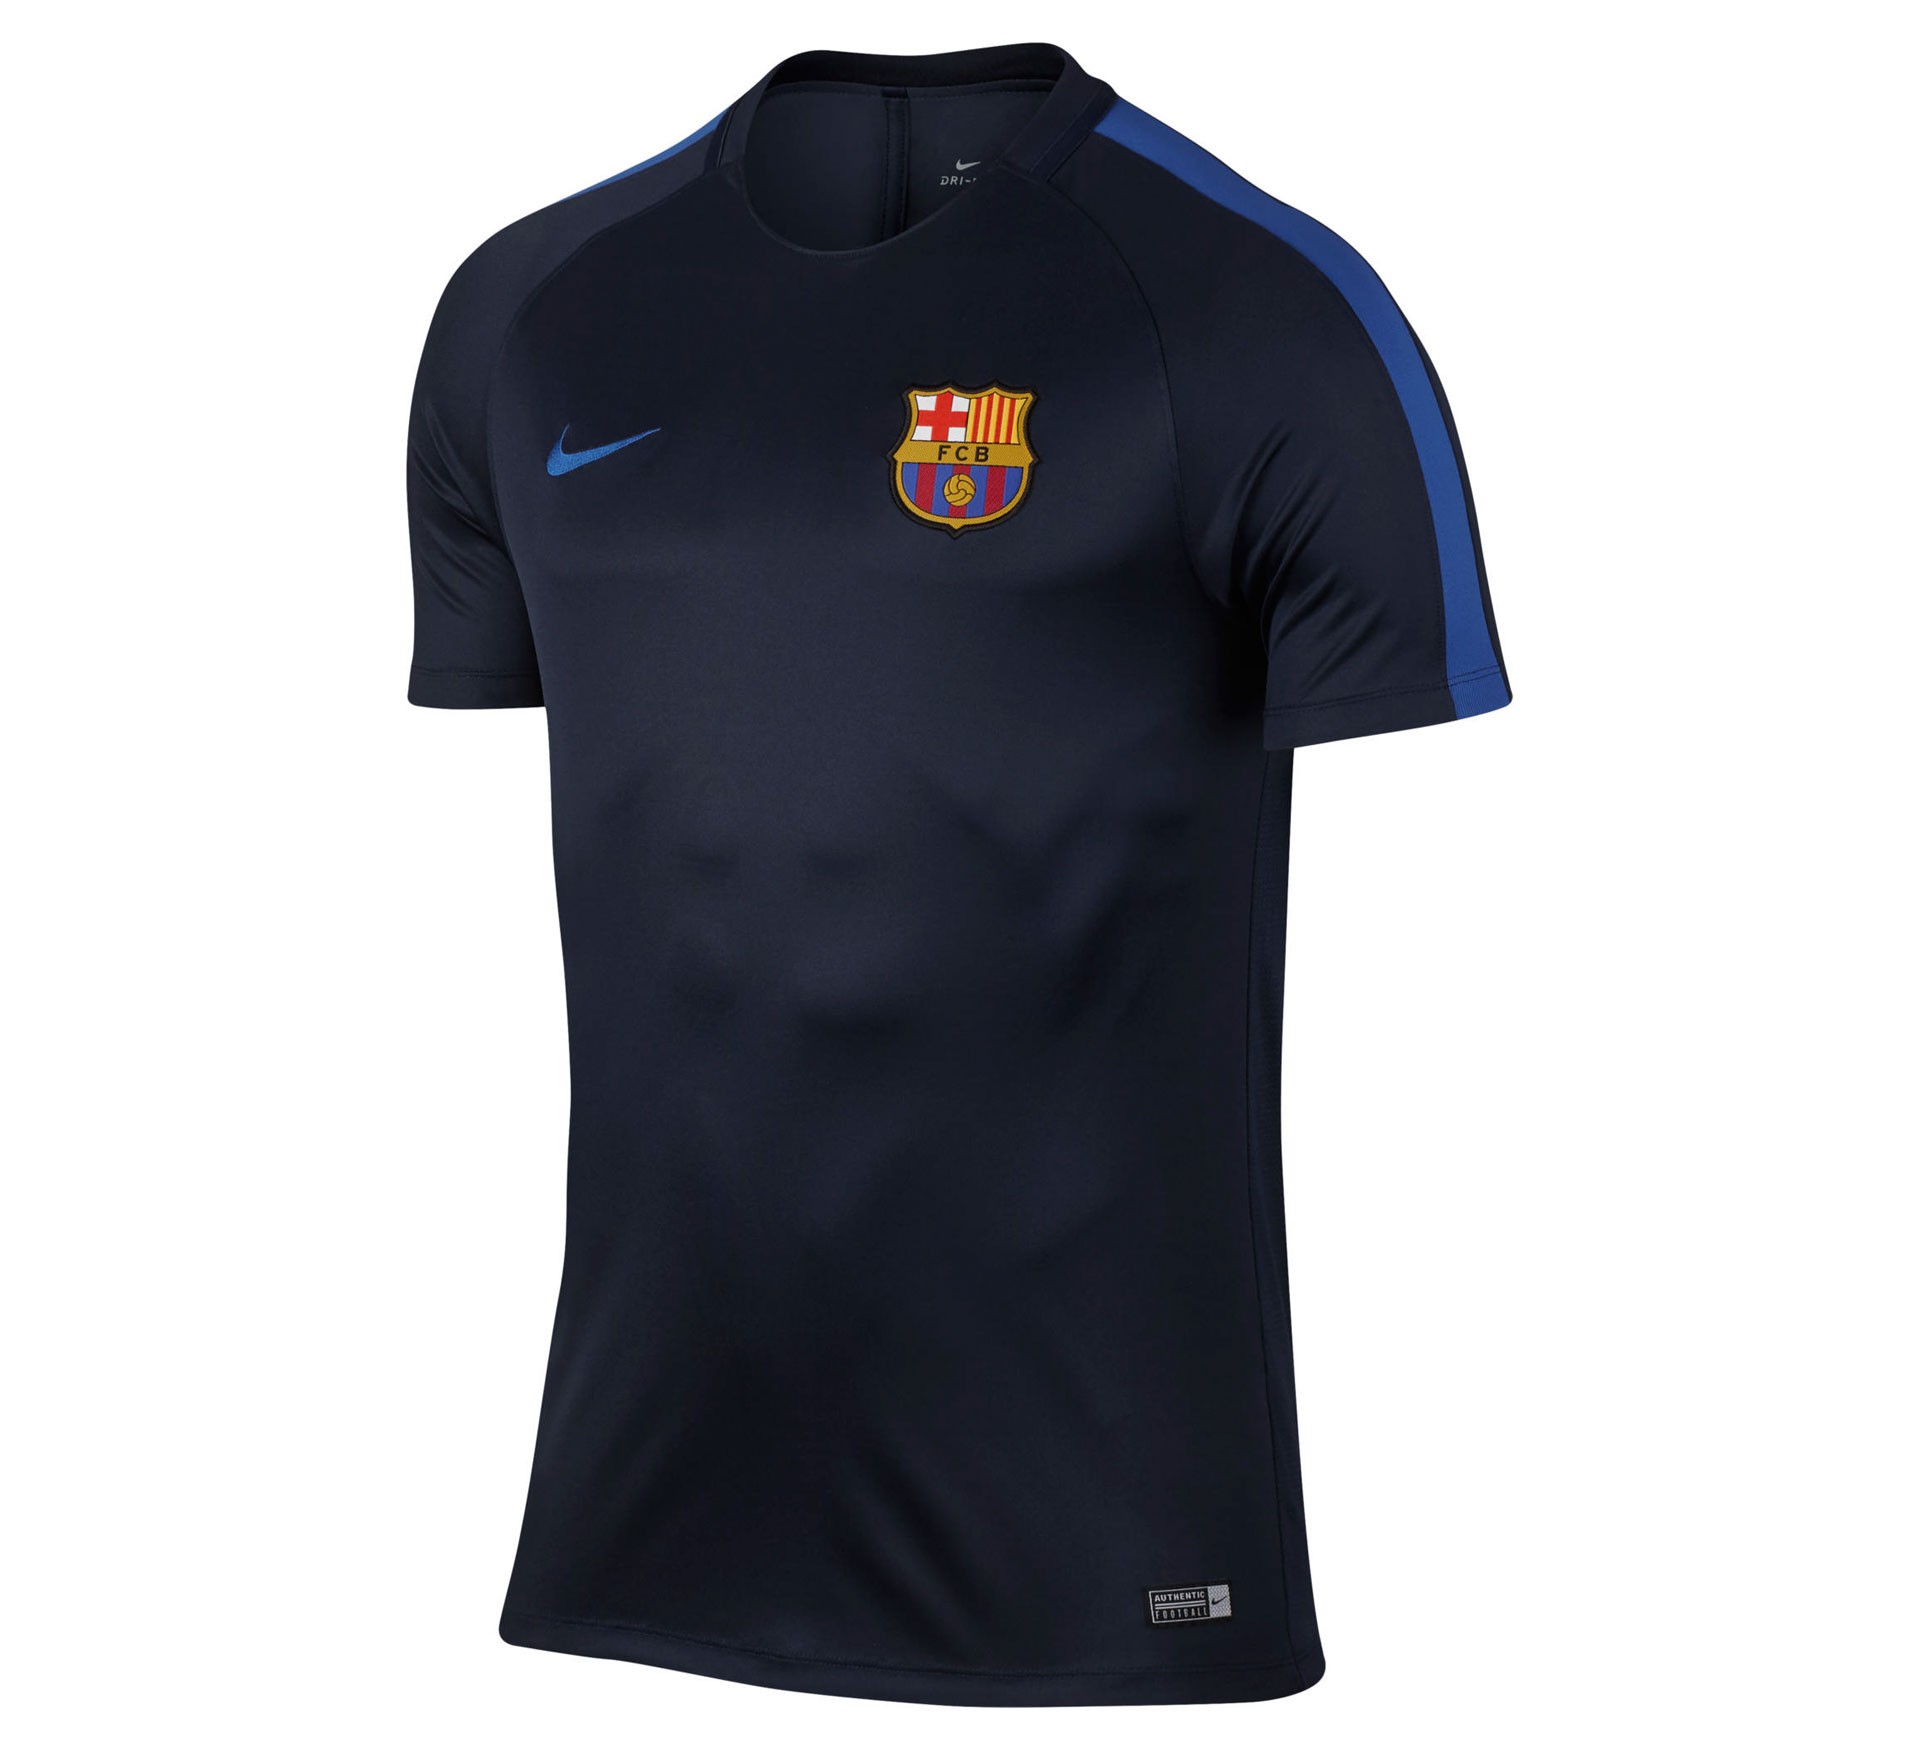 Plutosport - Nike Dry FC Barcelona Top